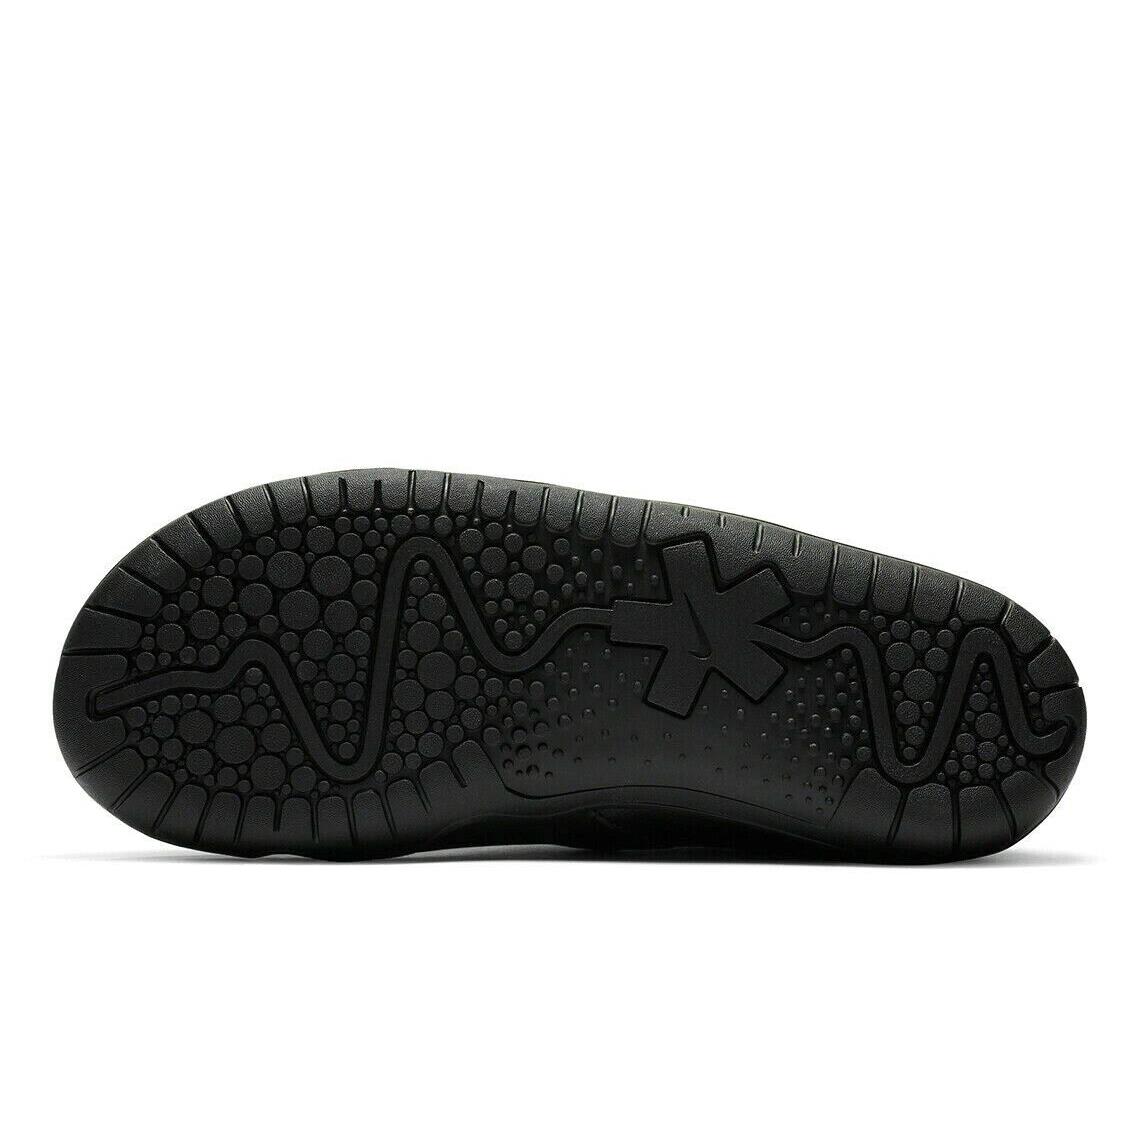 Nike shoes Zoom Pulse - Black 4